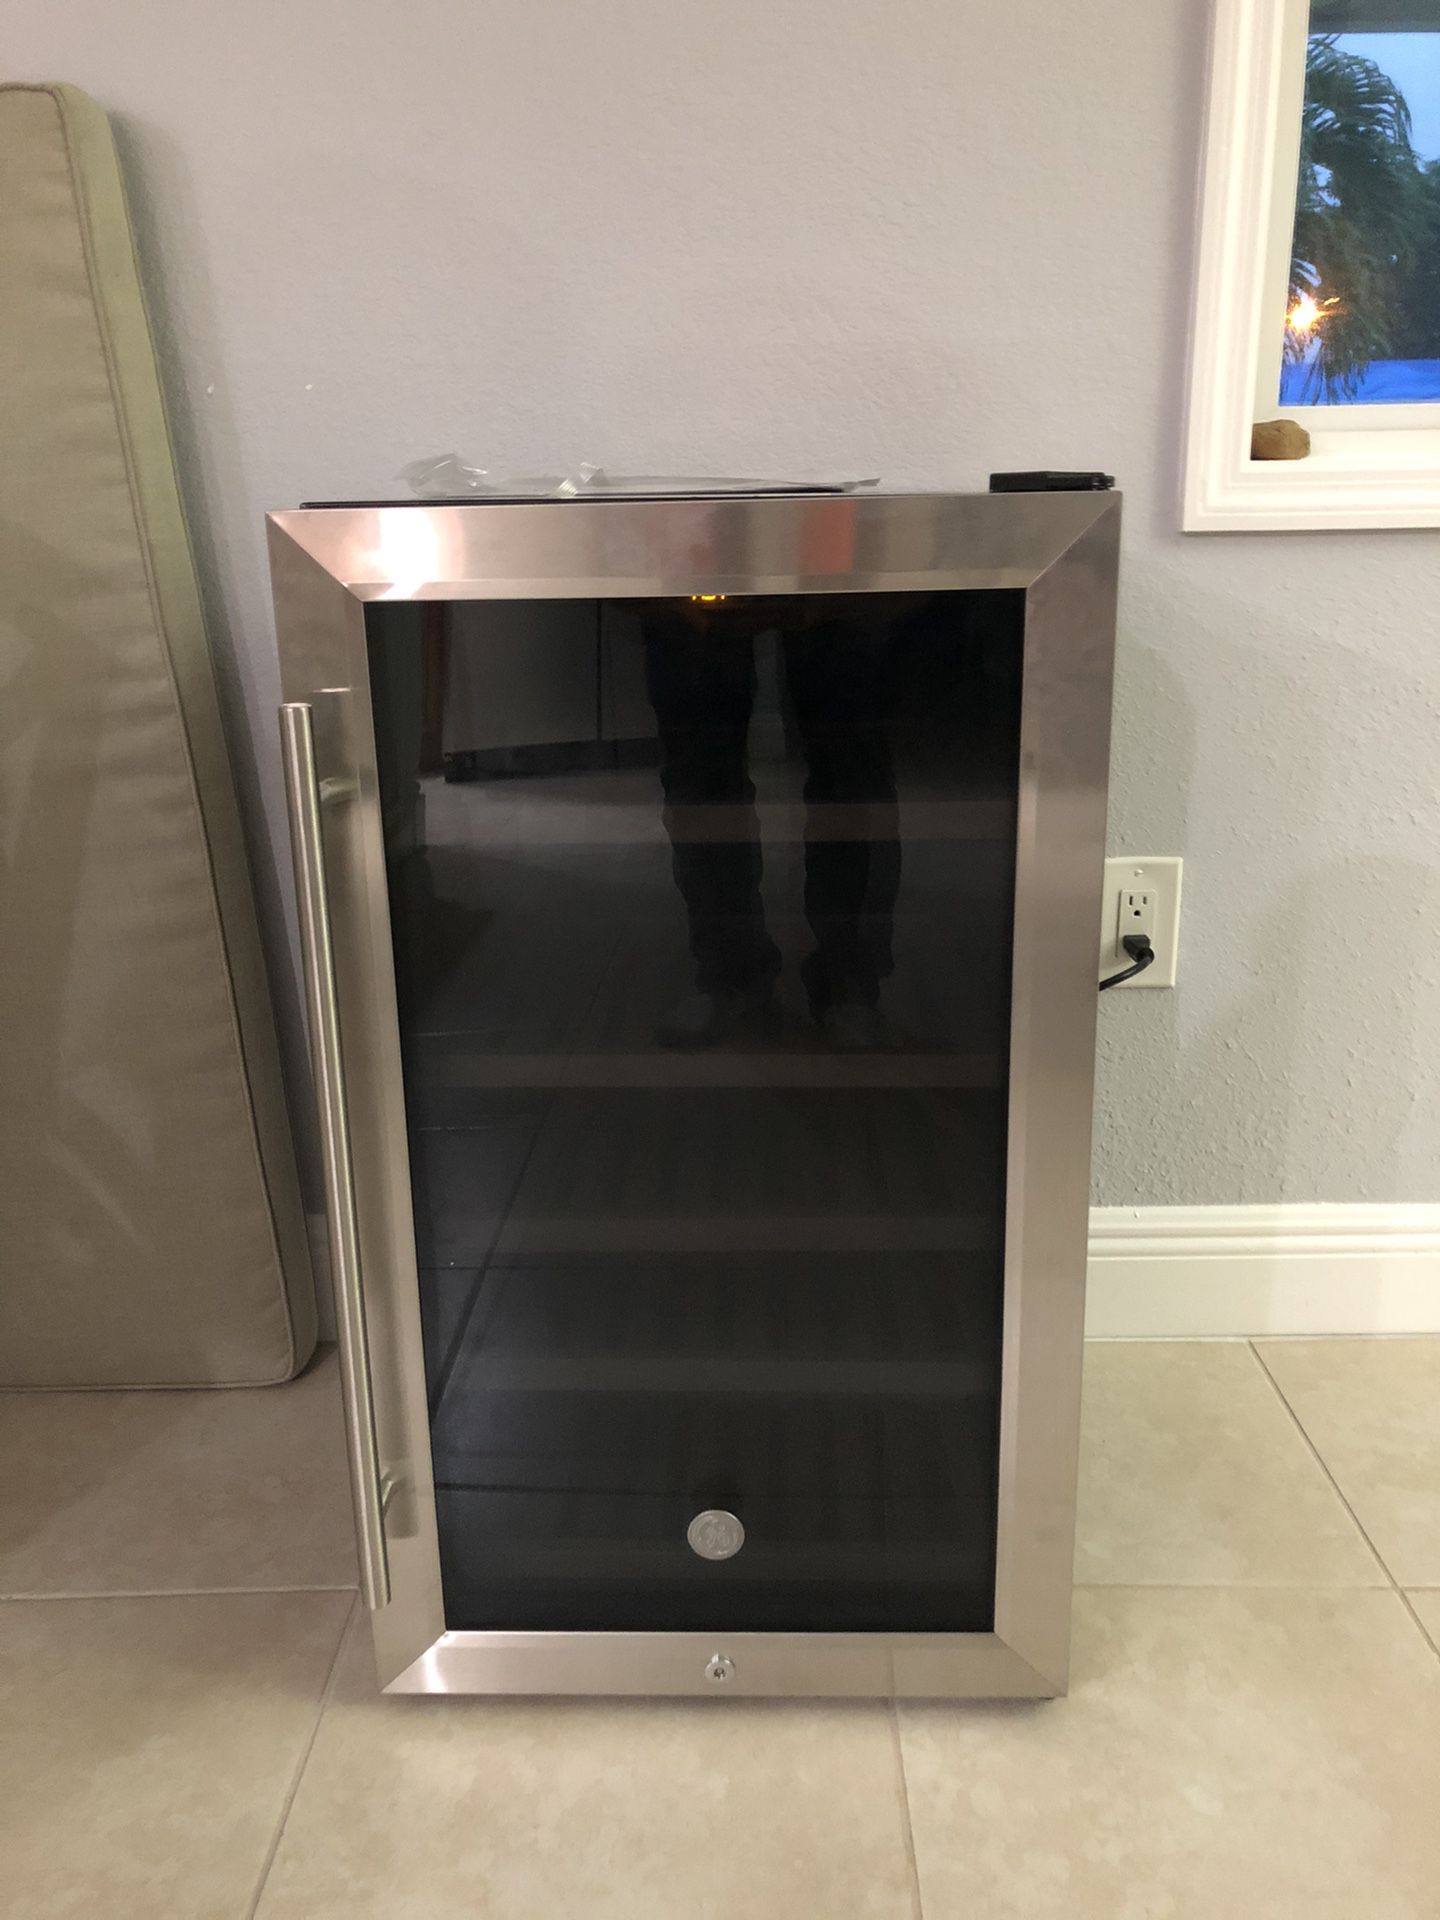 Brand new GE mini fridge/wine cooler